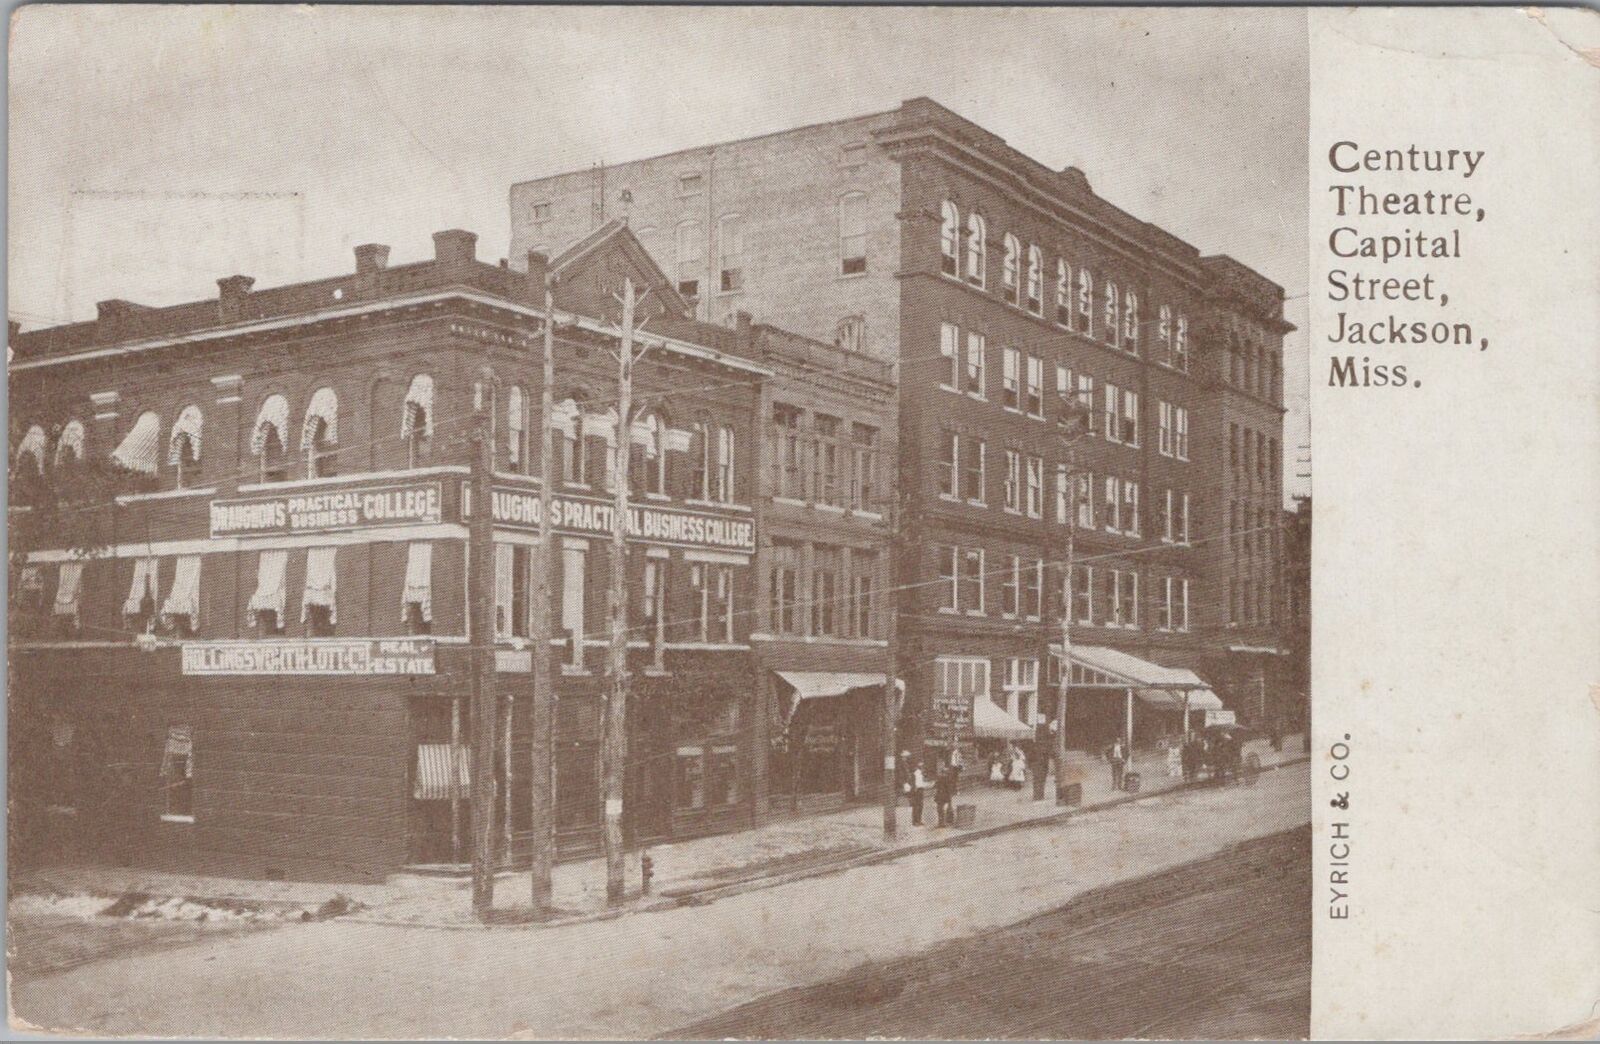 Century Theatre, Capital Street, Jackson, Mississippi c1900s Postcard